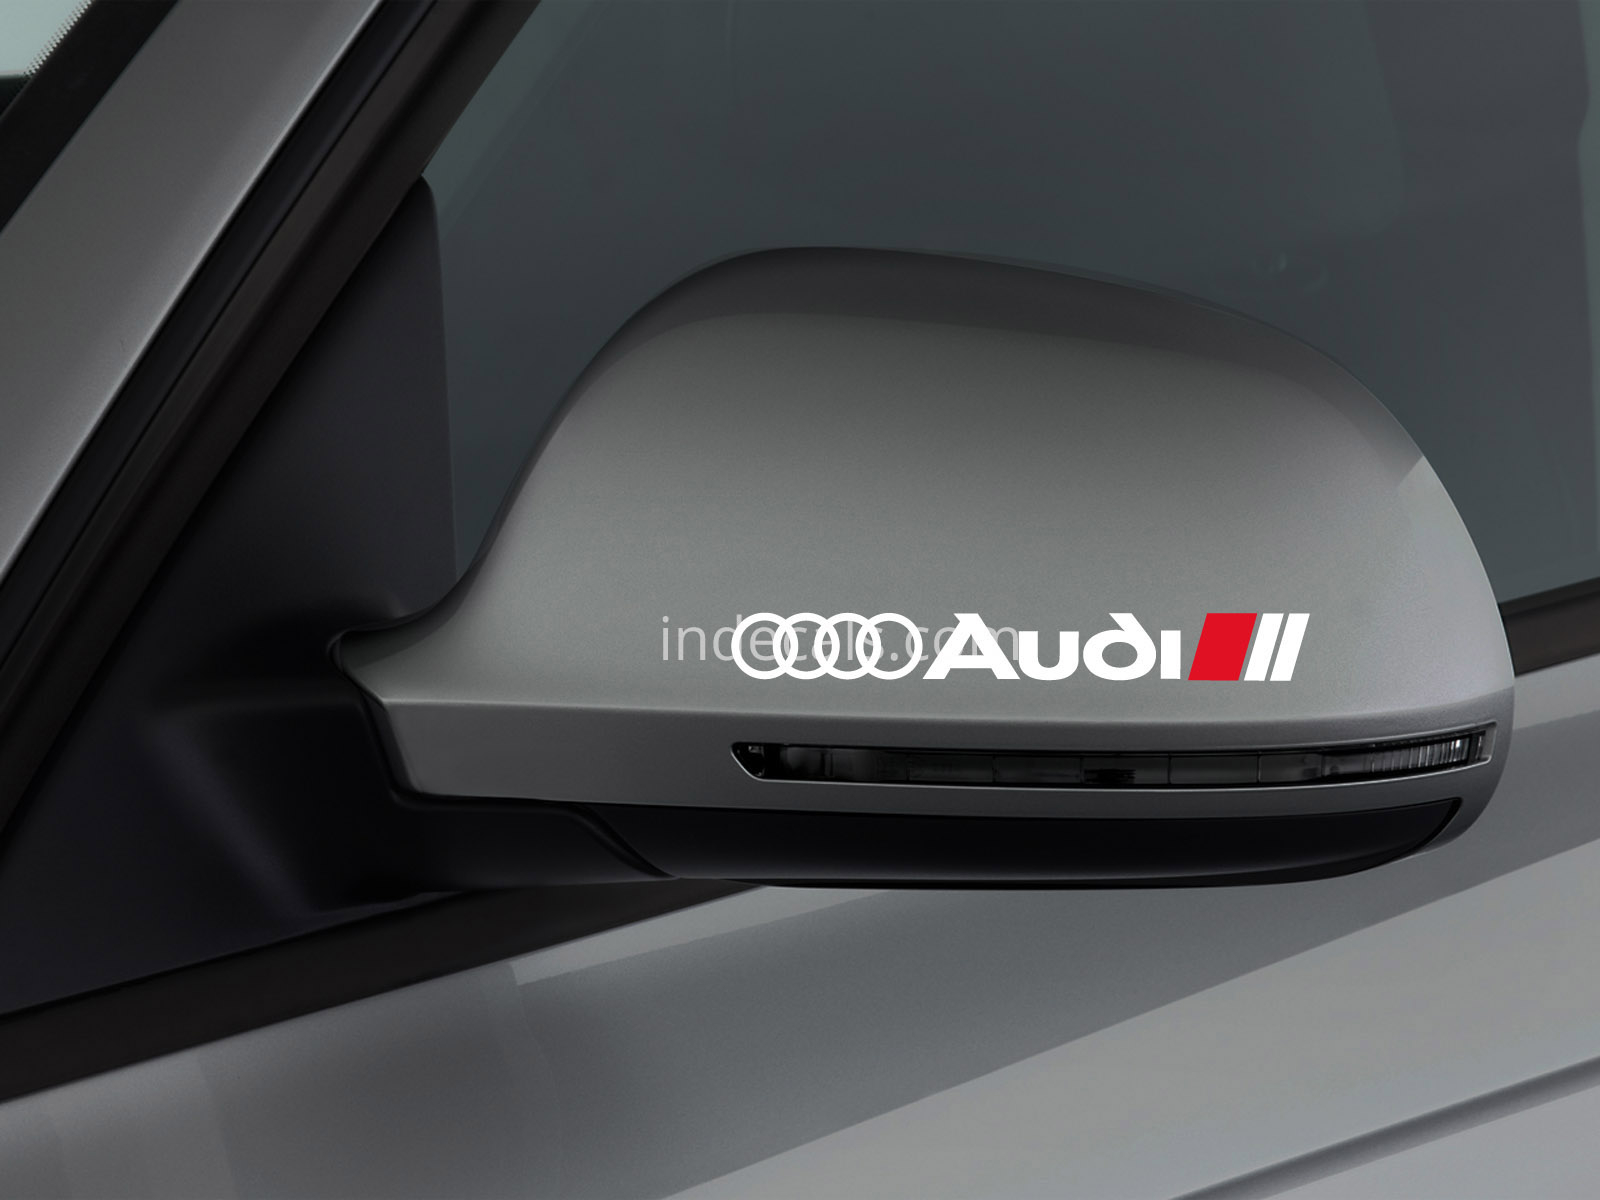 3 x Audi Stickers for Mirror - White